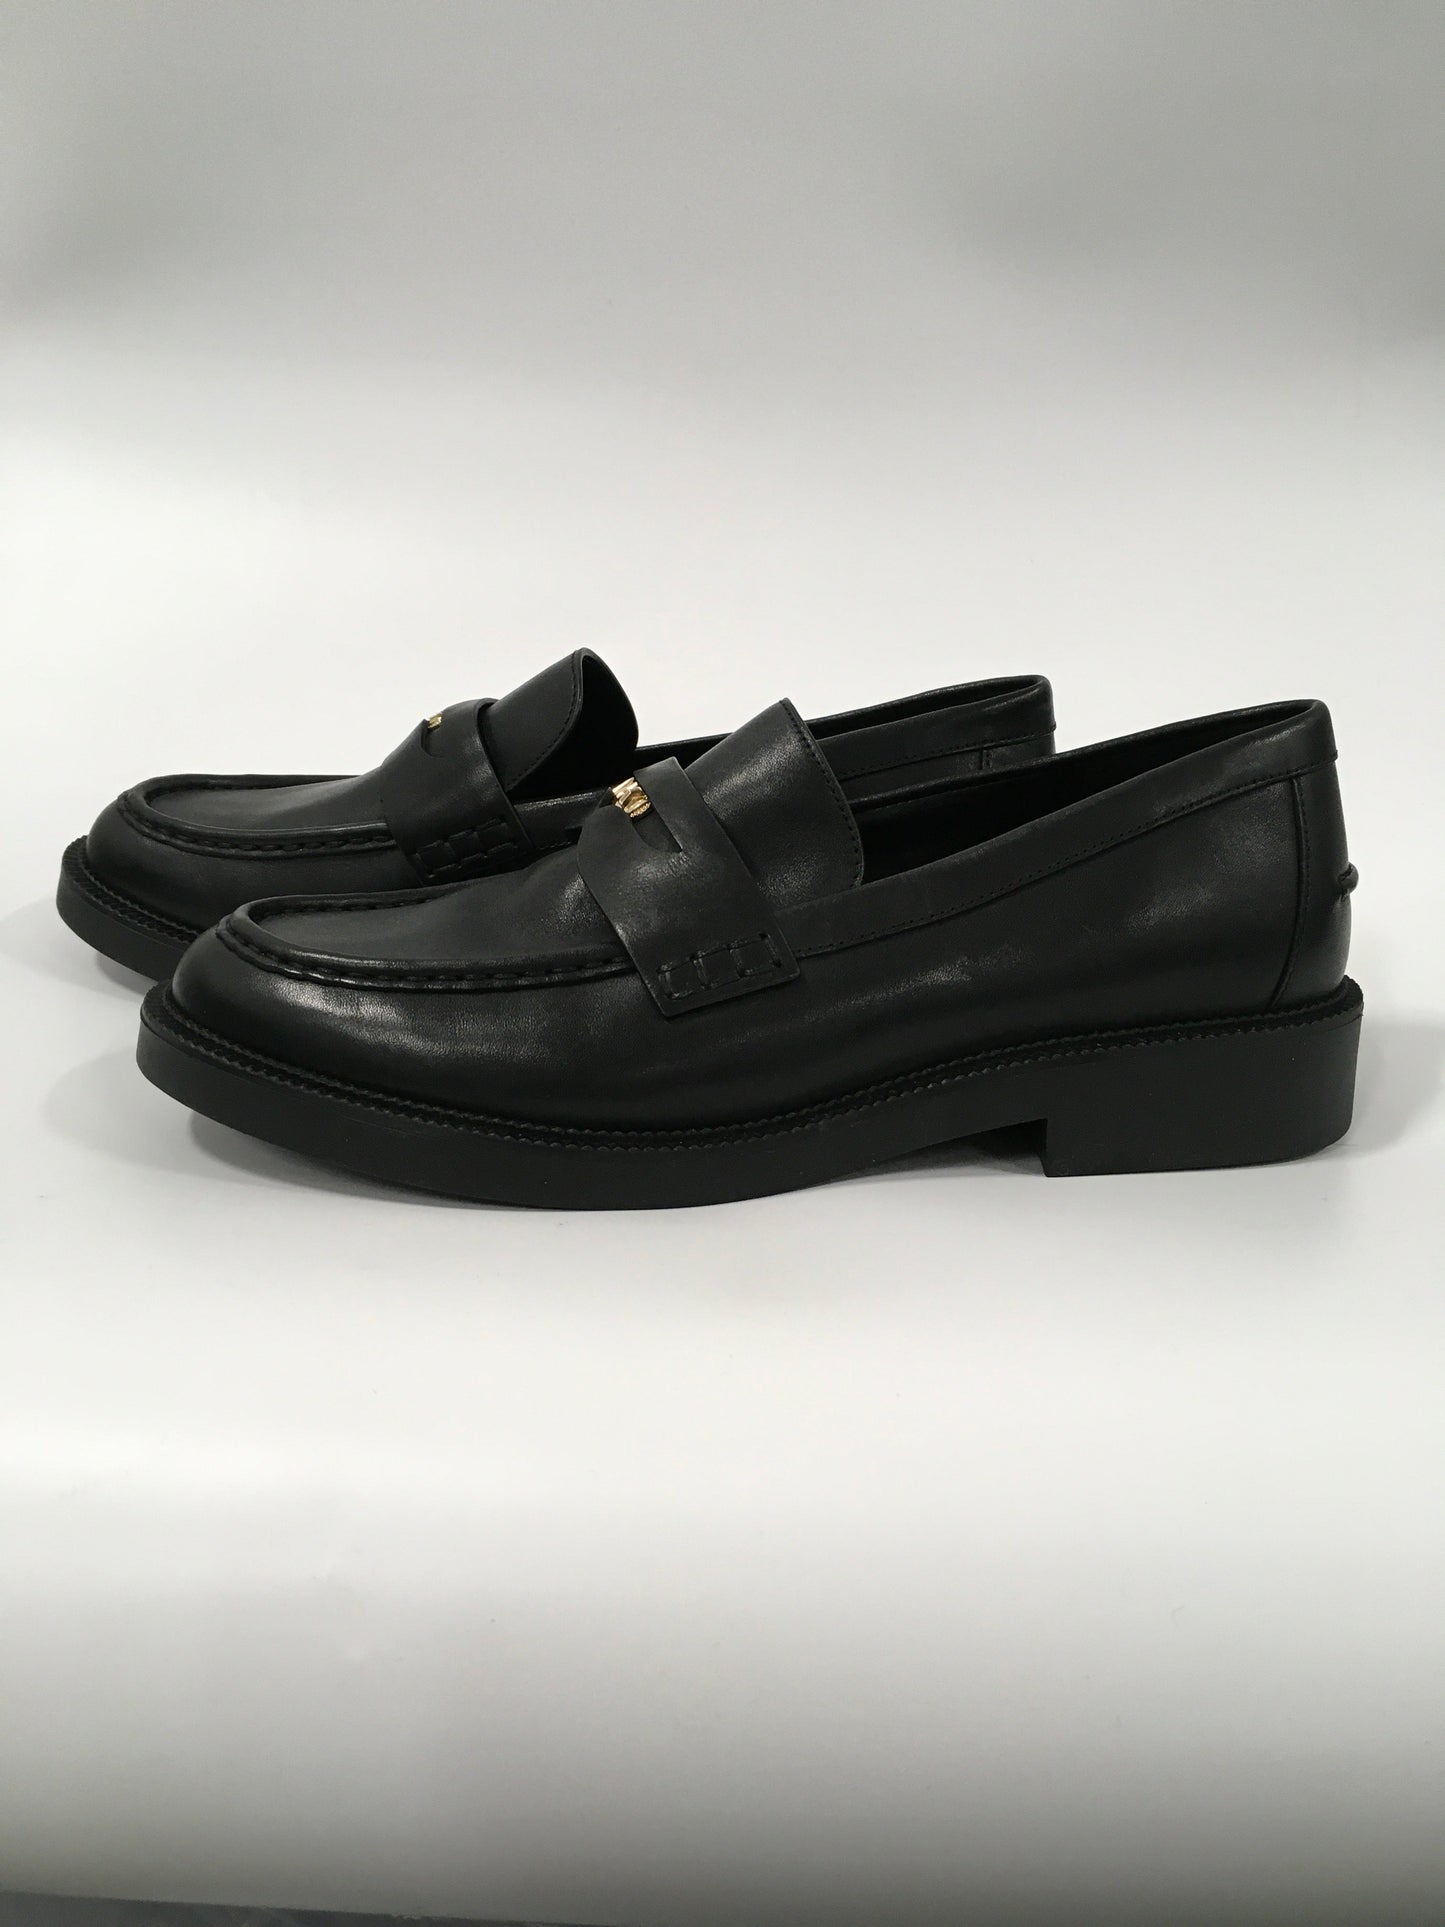 Black Shoes Flats Loafer Oxford Michael Kors, Size 9